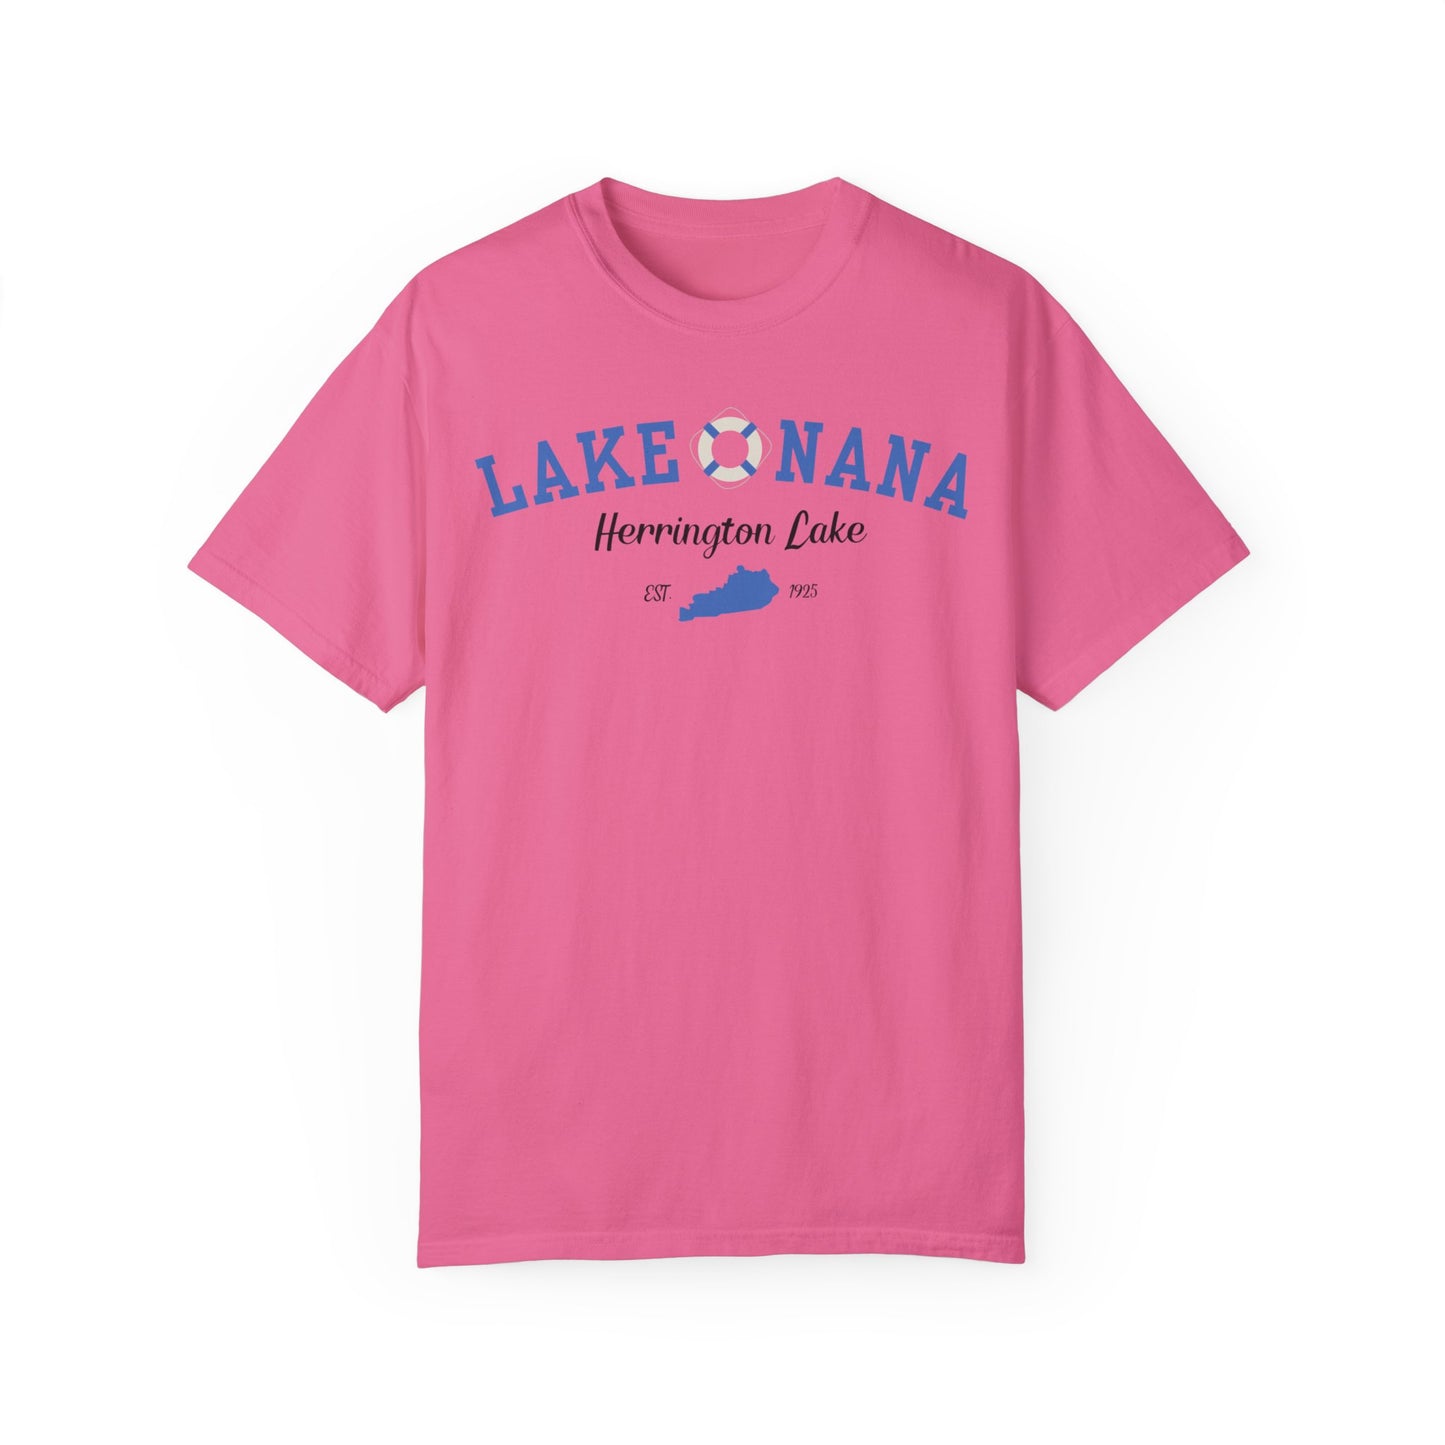 "Lake Nana" Premium Garment-Dyed Comfort Colors TShirt